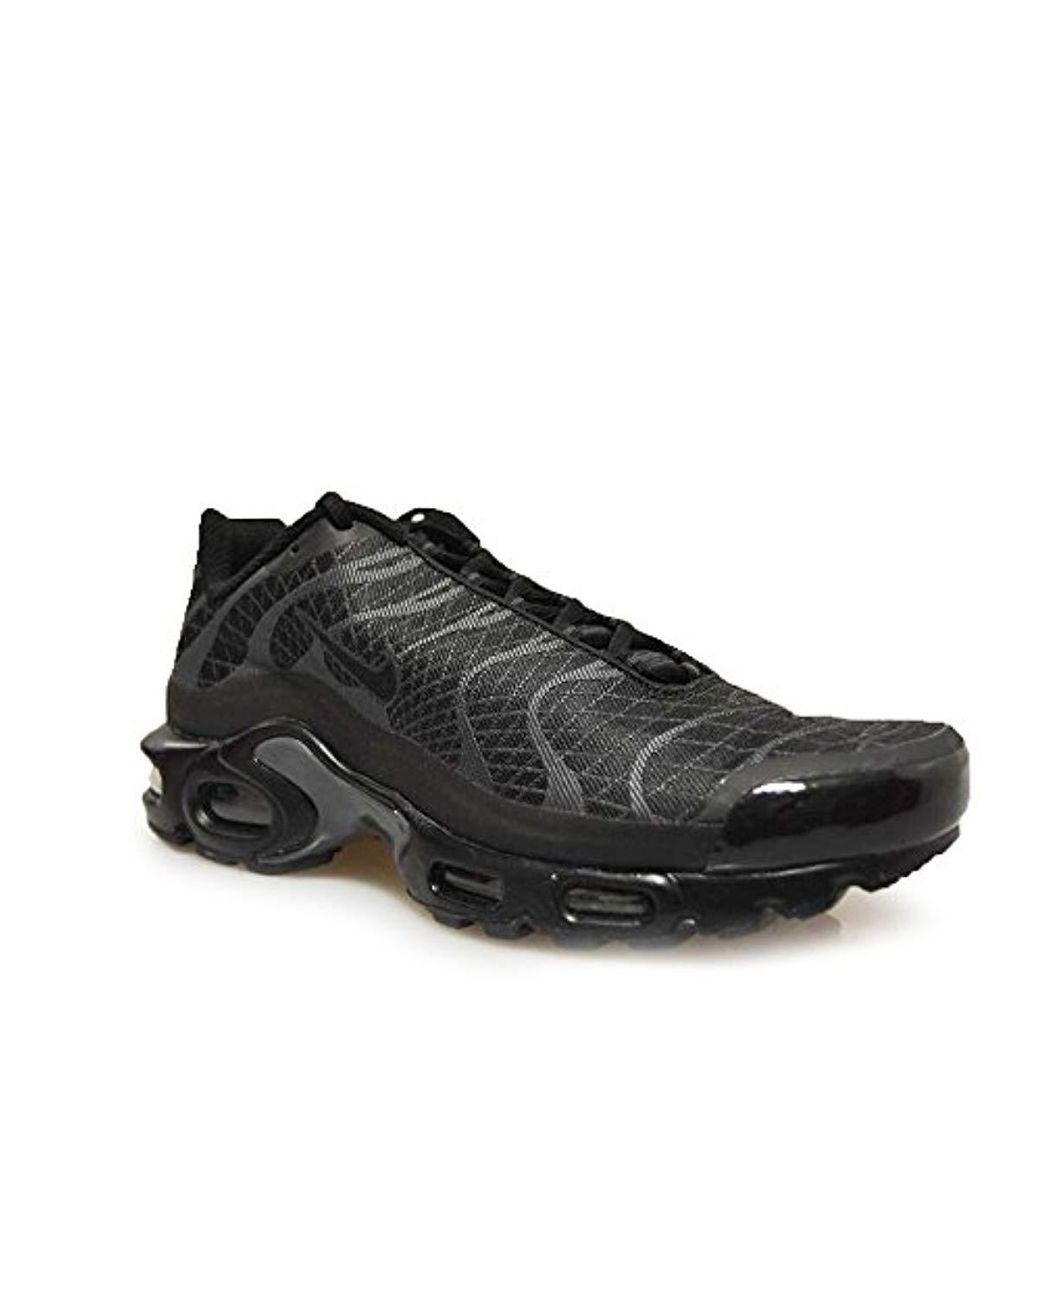 Nike Air Max Jacquard Tn Tuned Shoes in Black Men Lyst UK